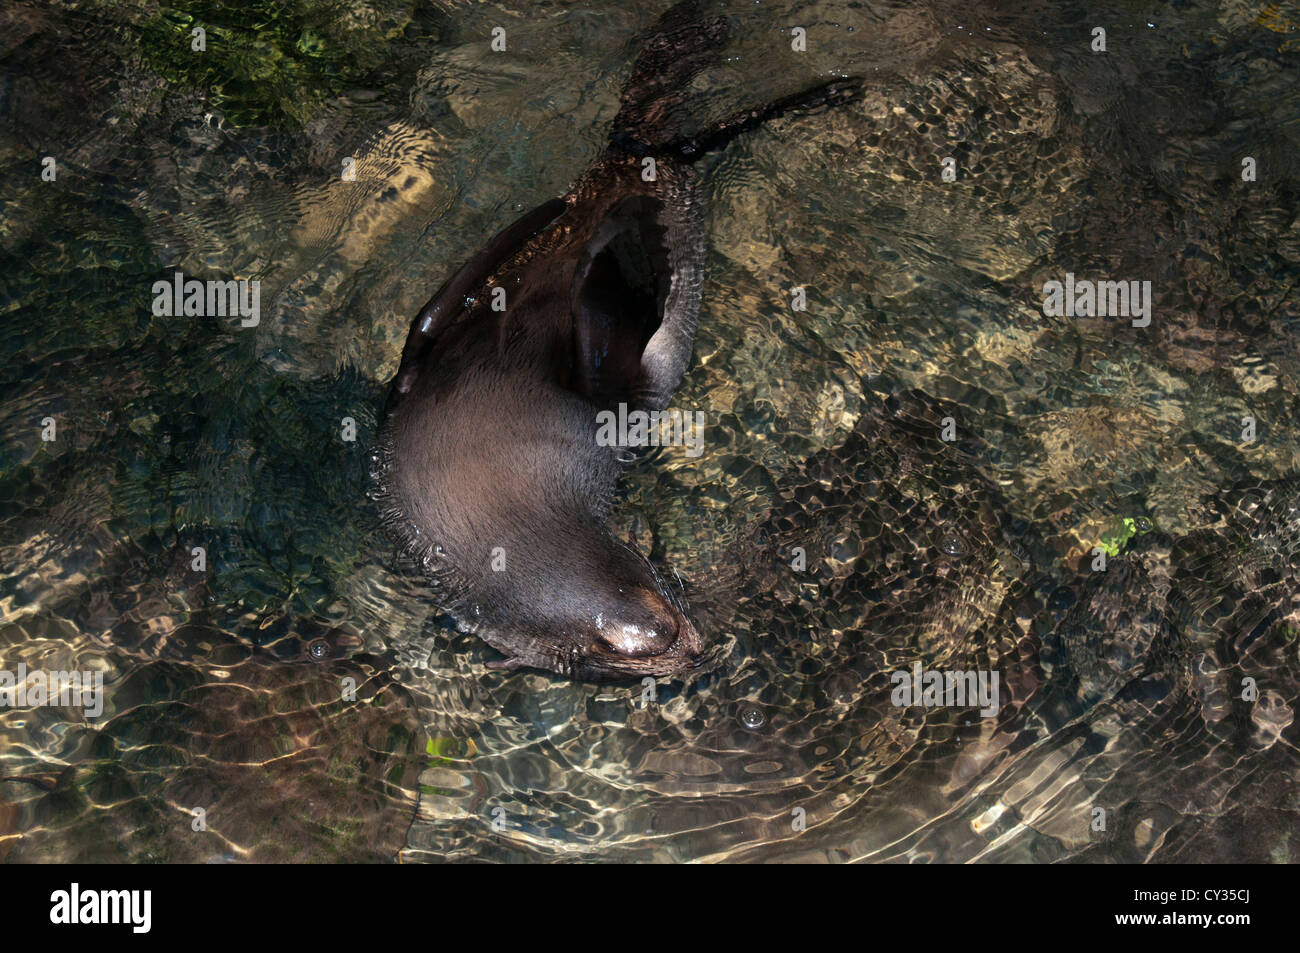 A New Zealand Fur Seal baby swimming in a natural pool near Kaikoura.  Ein junger neuseeländischer Seebär schwimmt im Tümpel. Stock Photo